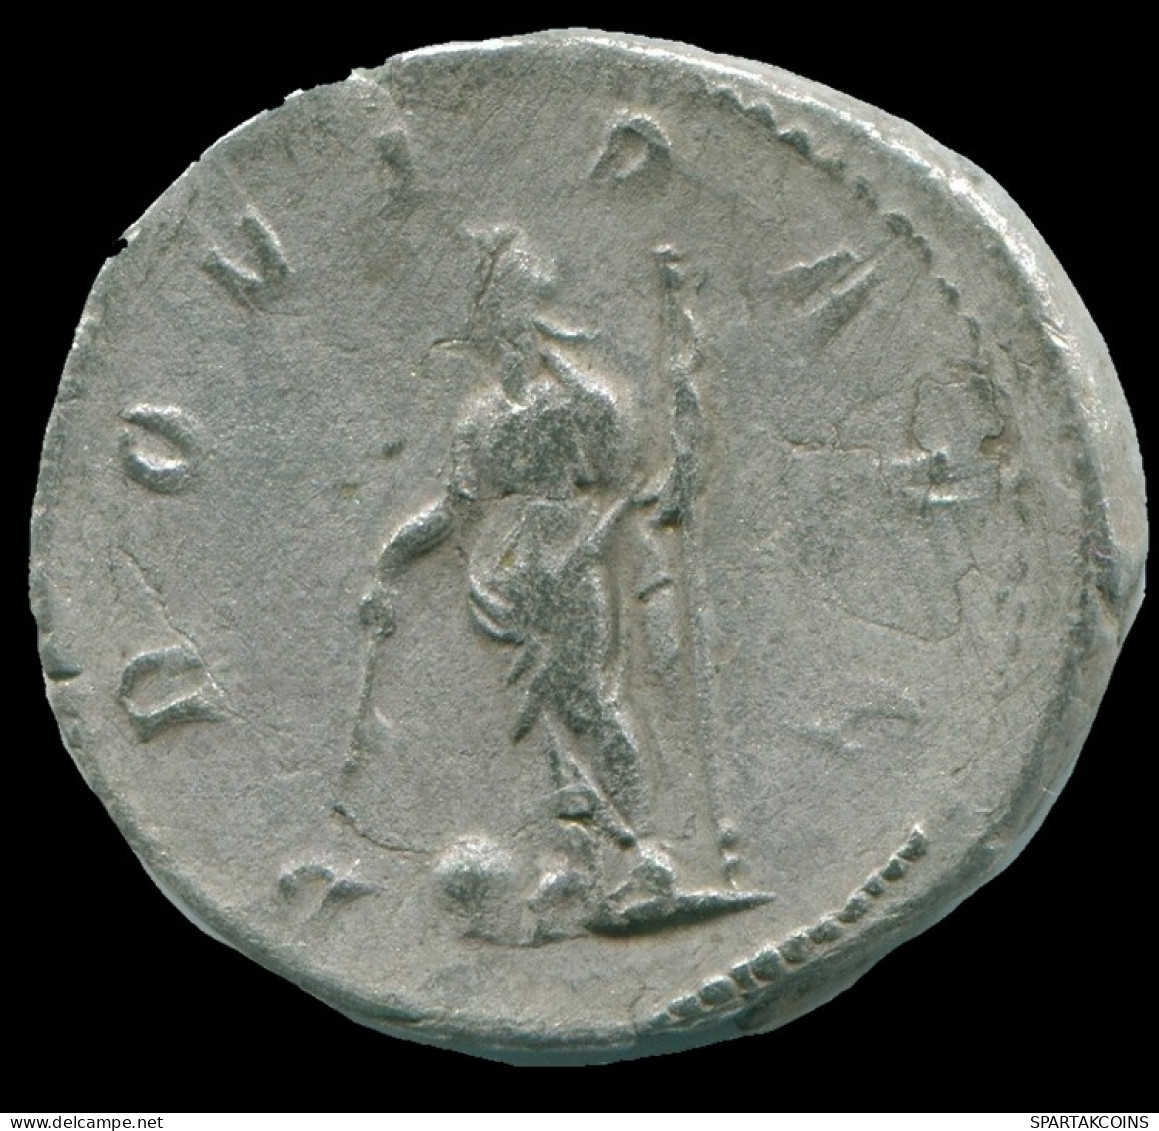 GORDIAN III AR ANTONINIANUS ROME AD 244 4TH OFFICINA PROVID AVG #ANC13120.43.D.A - L'Anarchie Militaire (235 à 284)